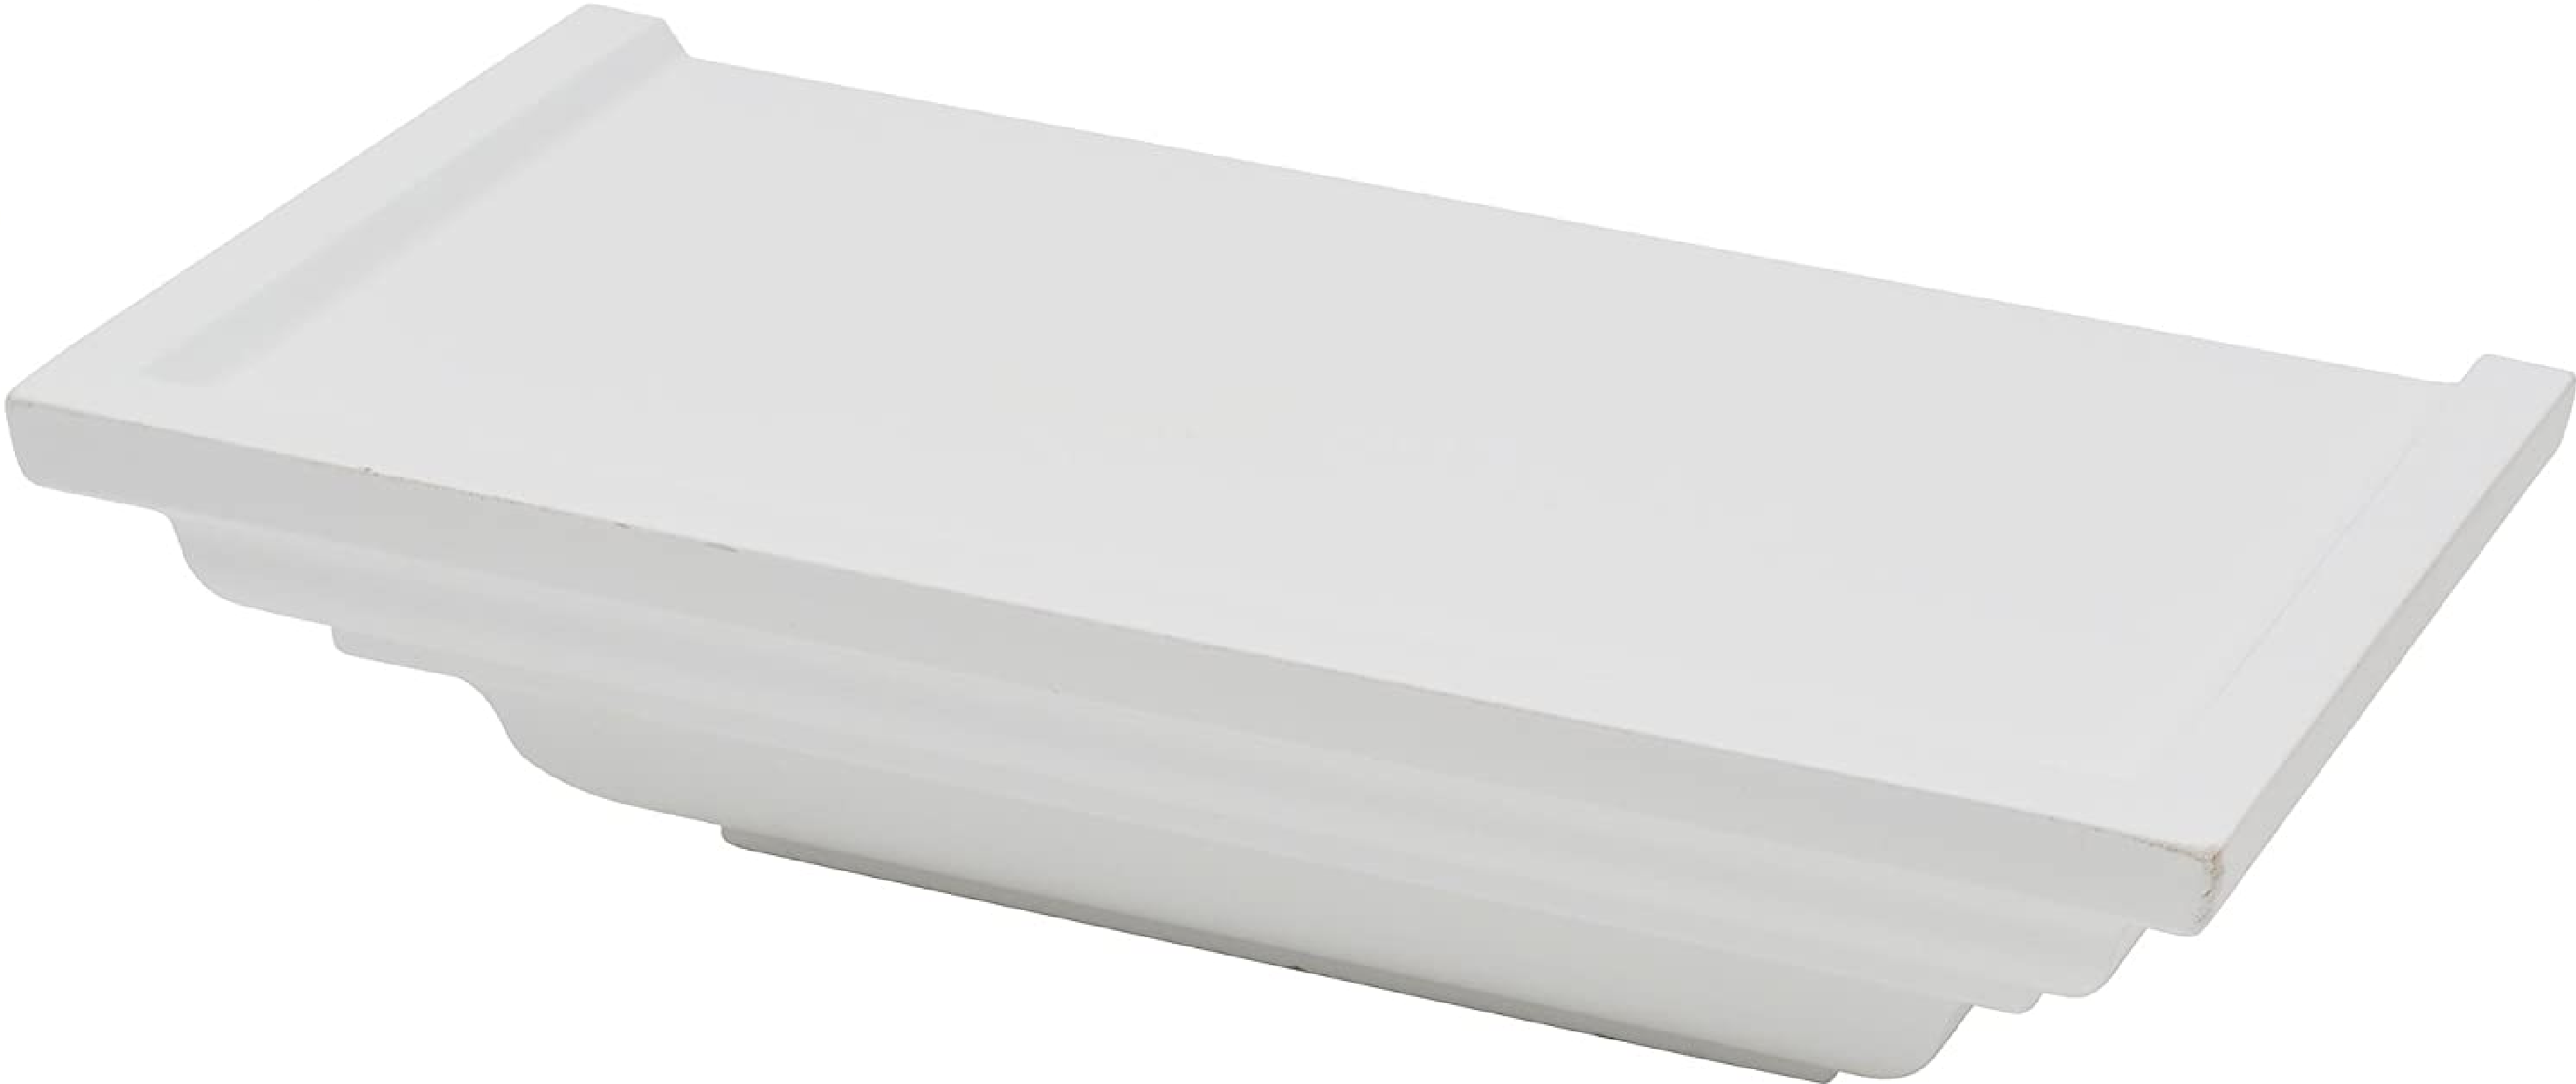 Regalbrett Modern Shelf, 25 x 12,5 x 7,5 cm, Weiß